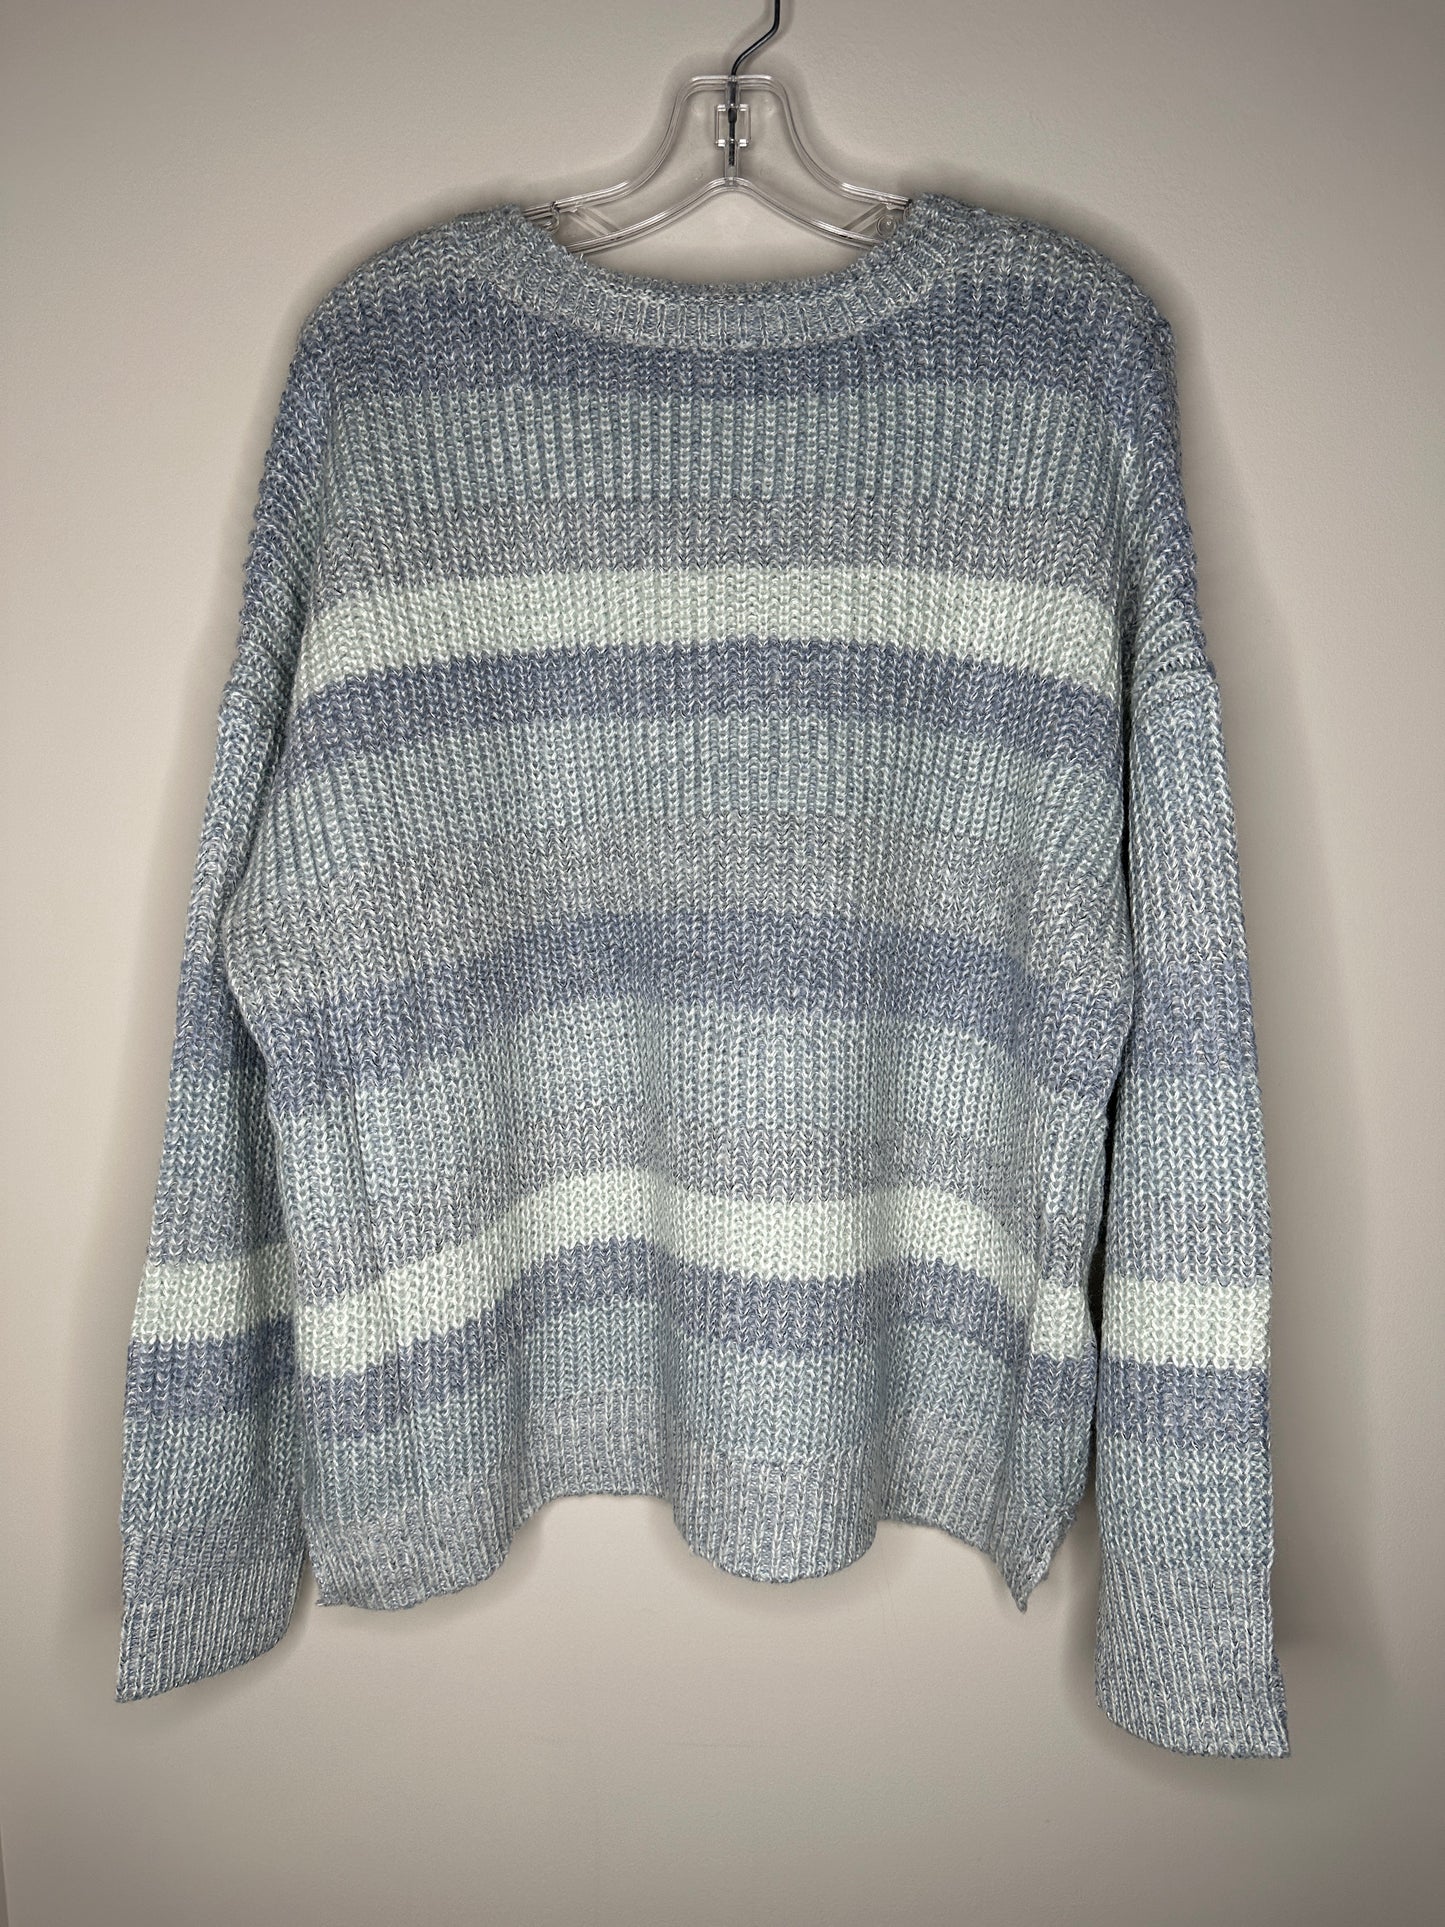 CJ Banks Size XL Light Blue Striped Sweater, new/NWT